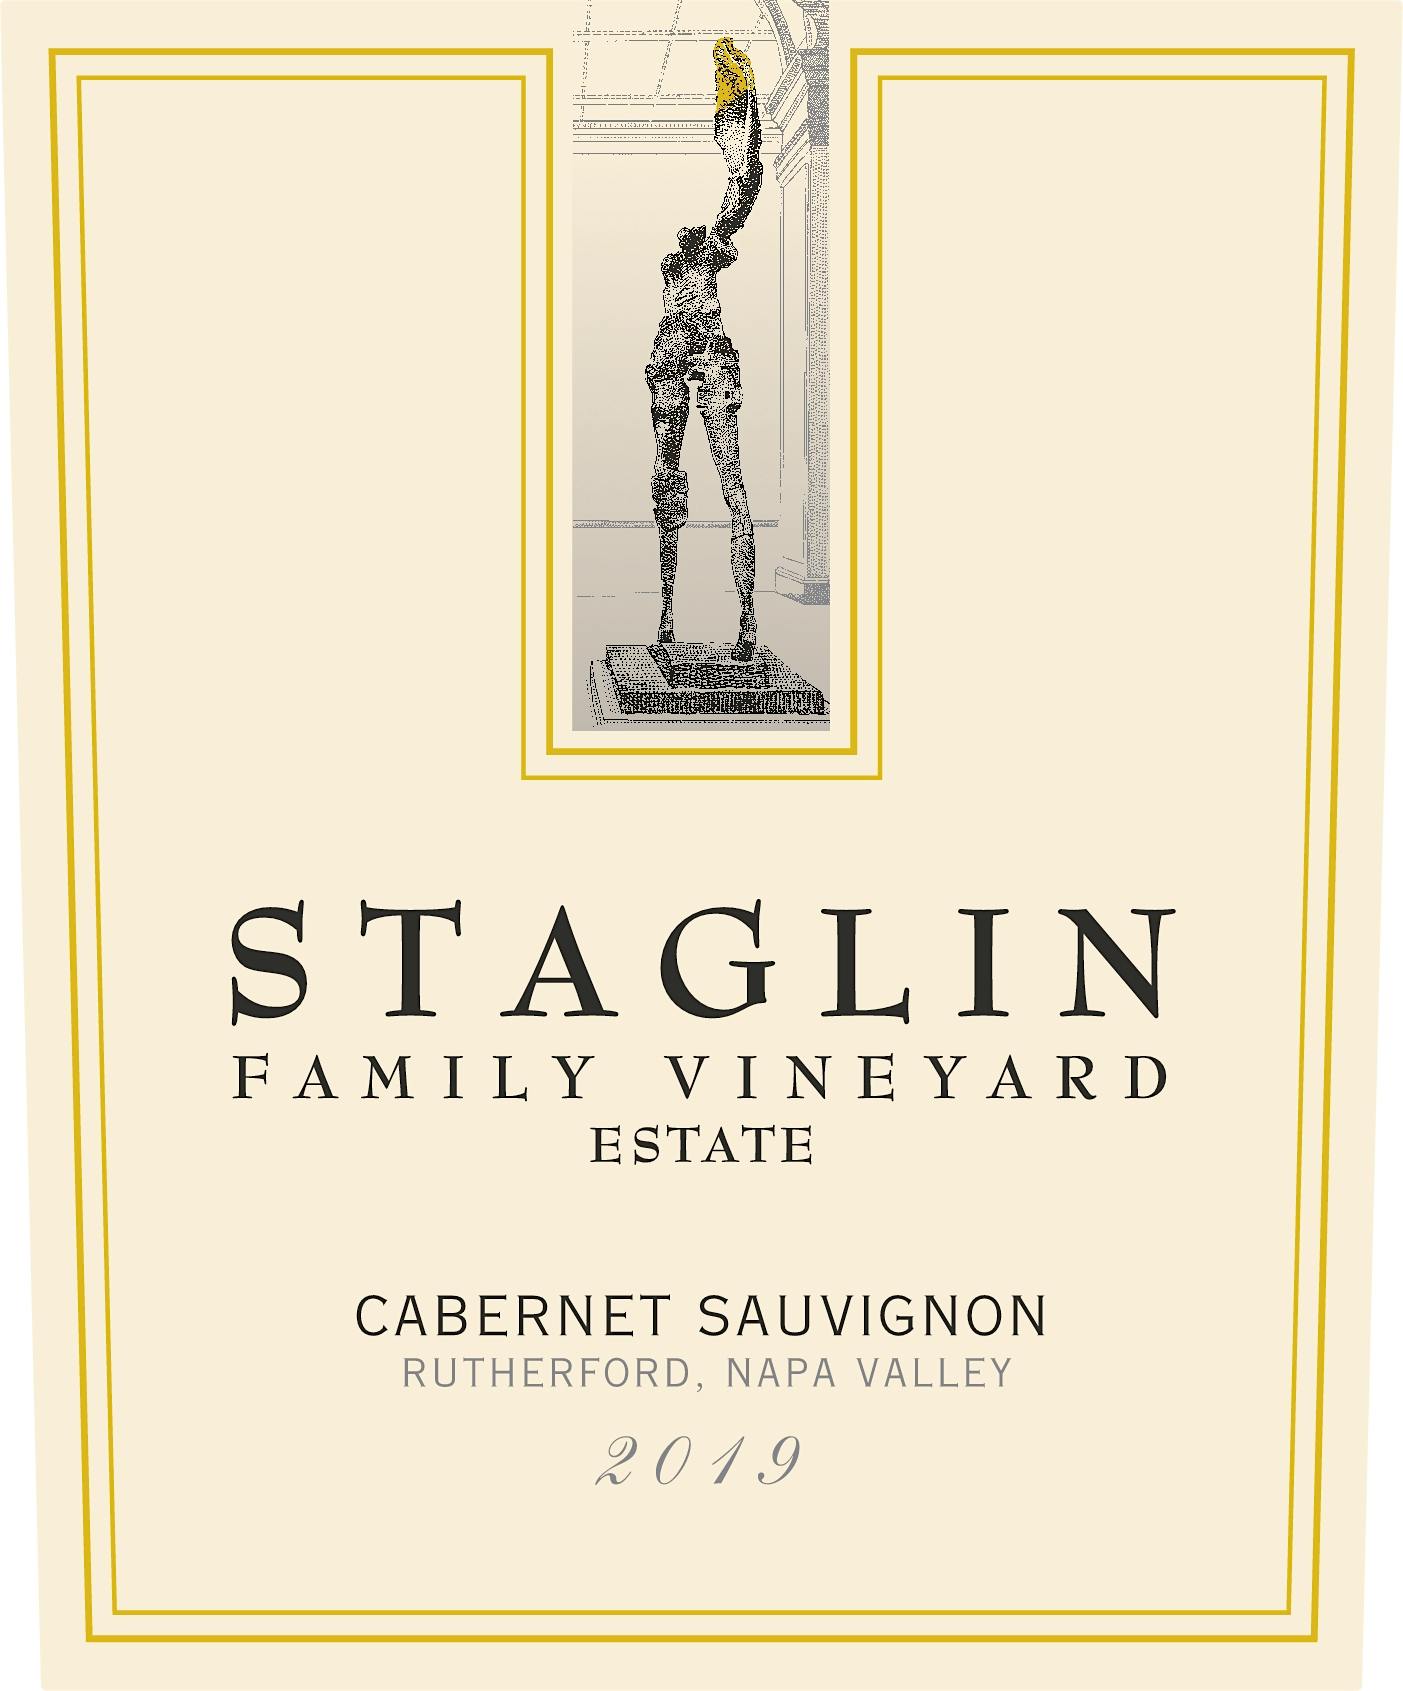 Label for Staglin